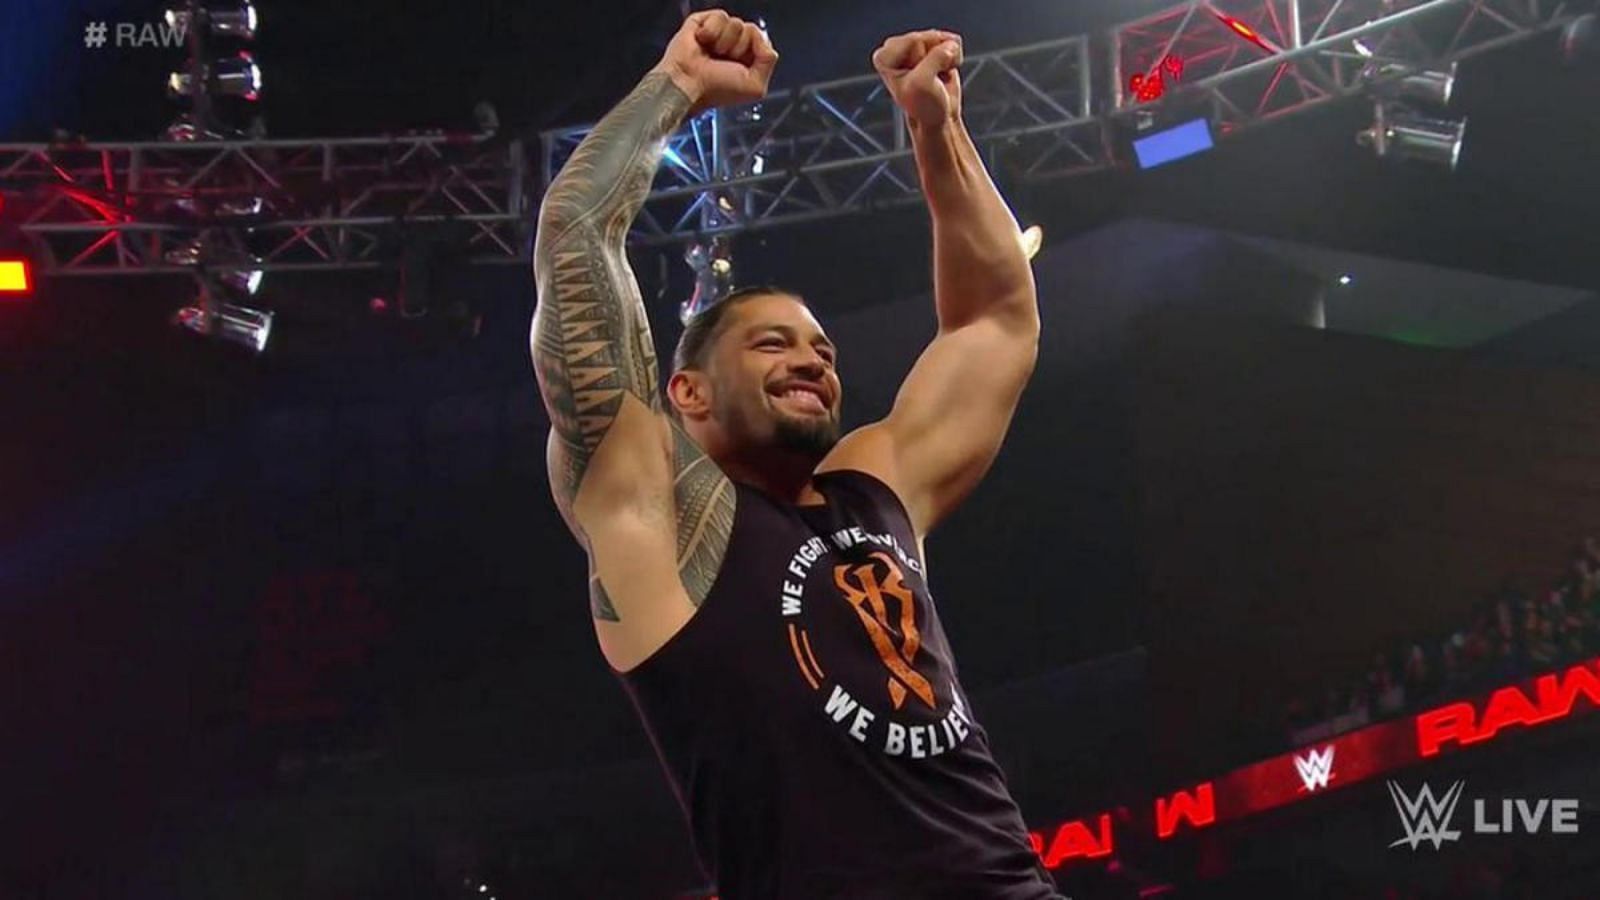 Roman Reigns on WWE RAW in 2019.